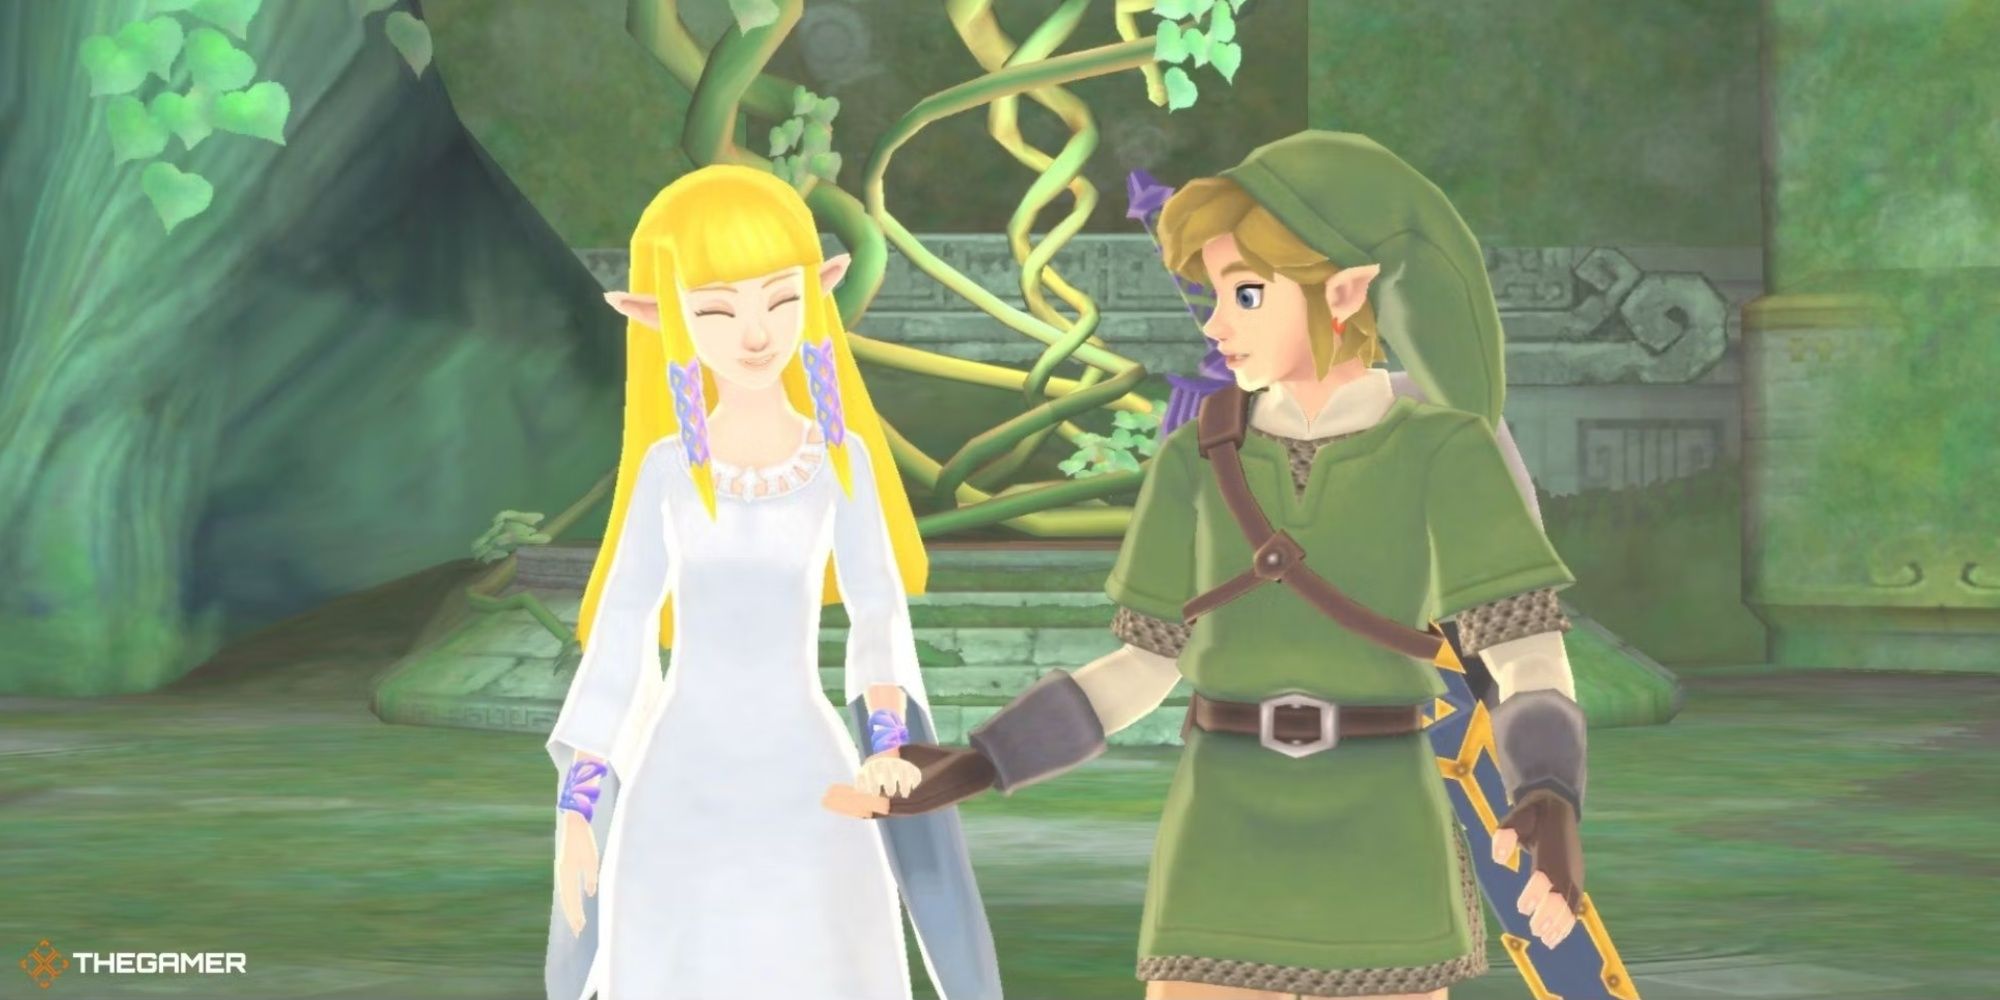 Link holds Zelda's hand as she smiles in Skyward Sword.